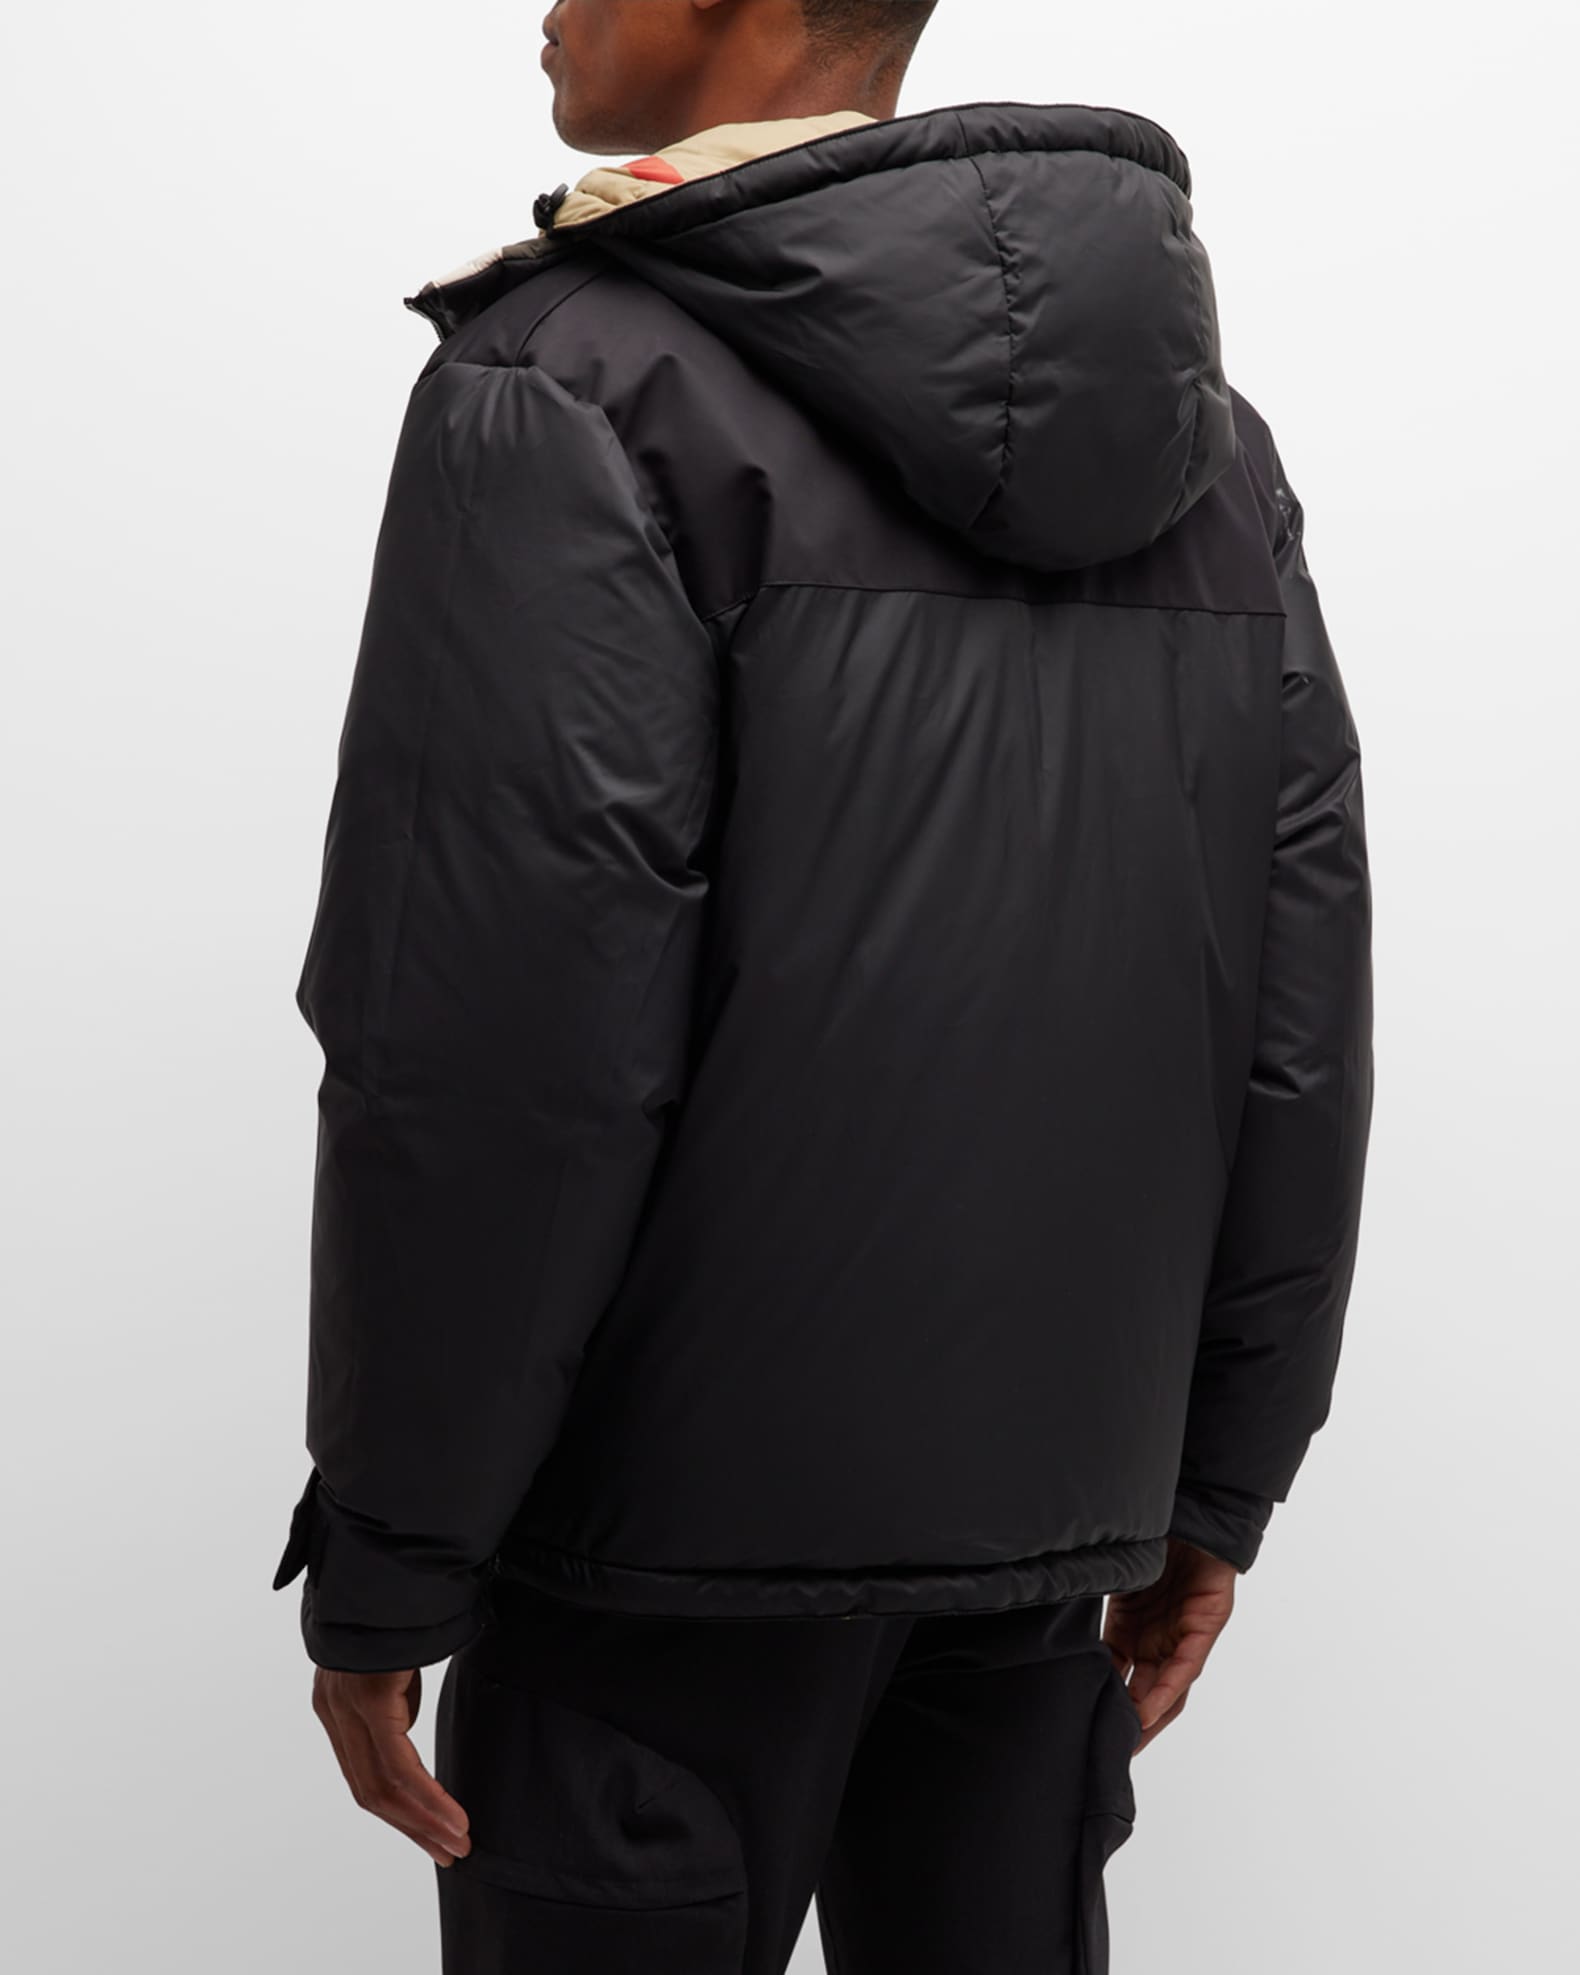 Burberry Men's Rutland Check Nylon Puffer Jacket | Neiman Marcus